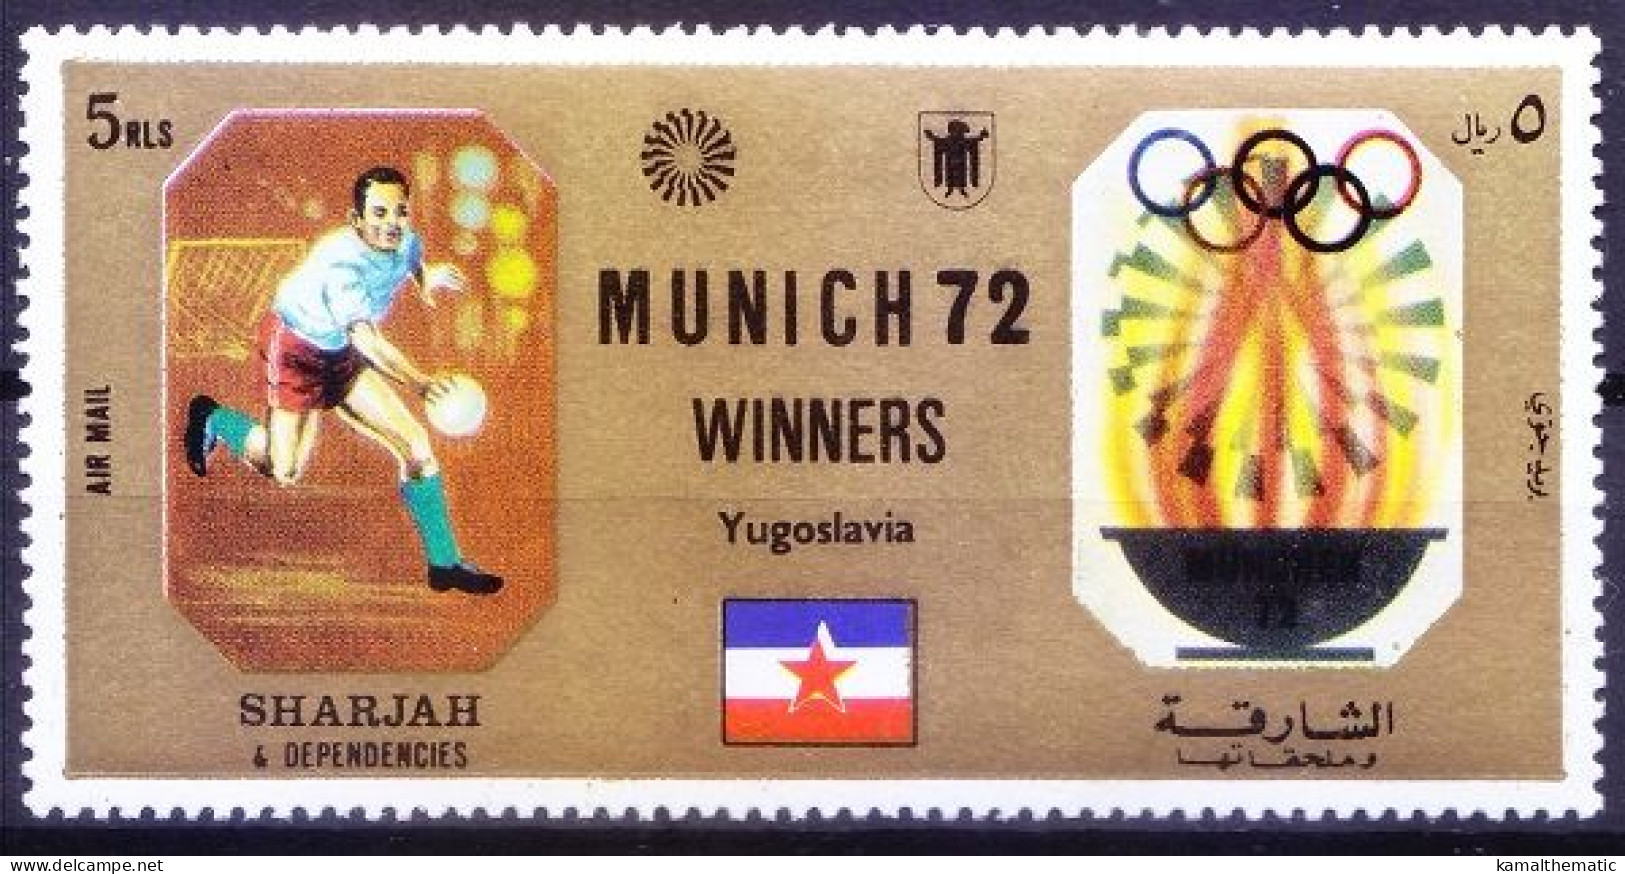 Sharjah 1972 MNH, Olympic Games, Handball Winner Yugoslavia, Sports - Summer 1972: Munich